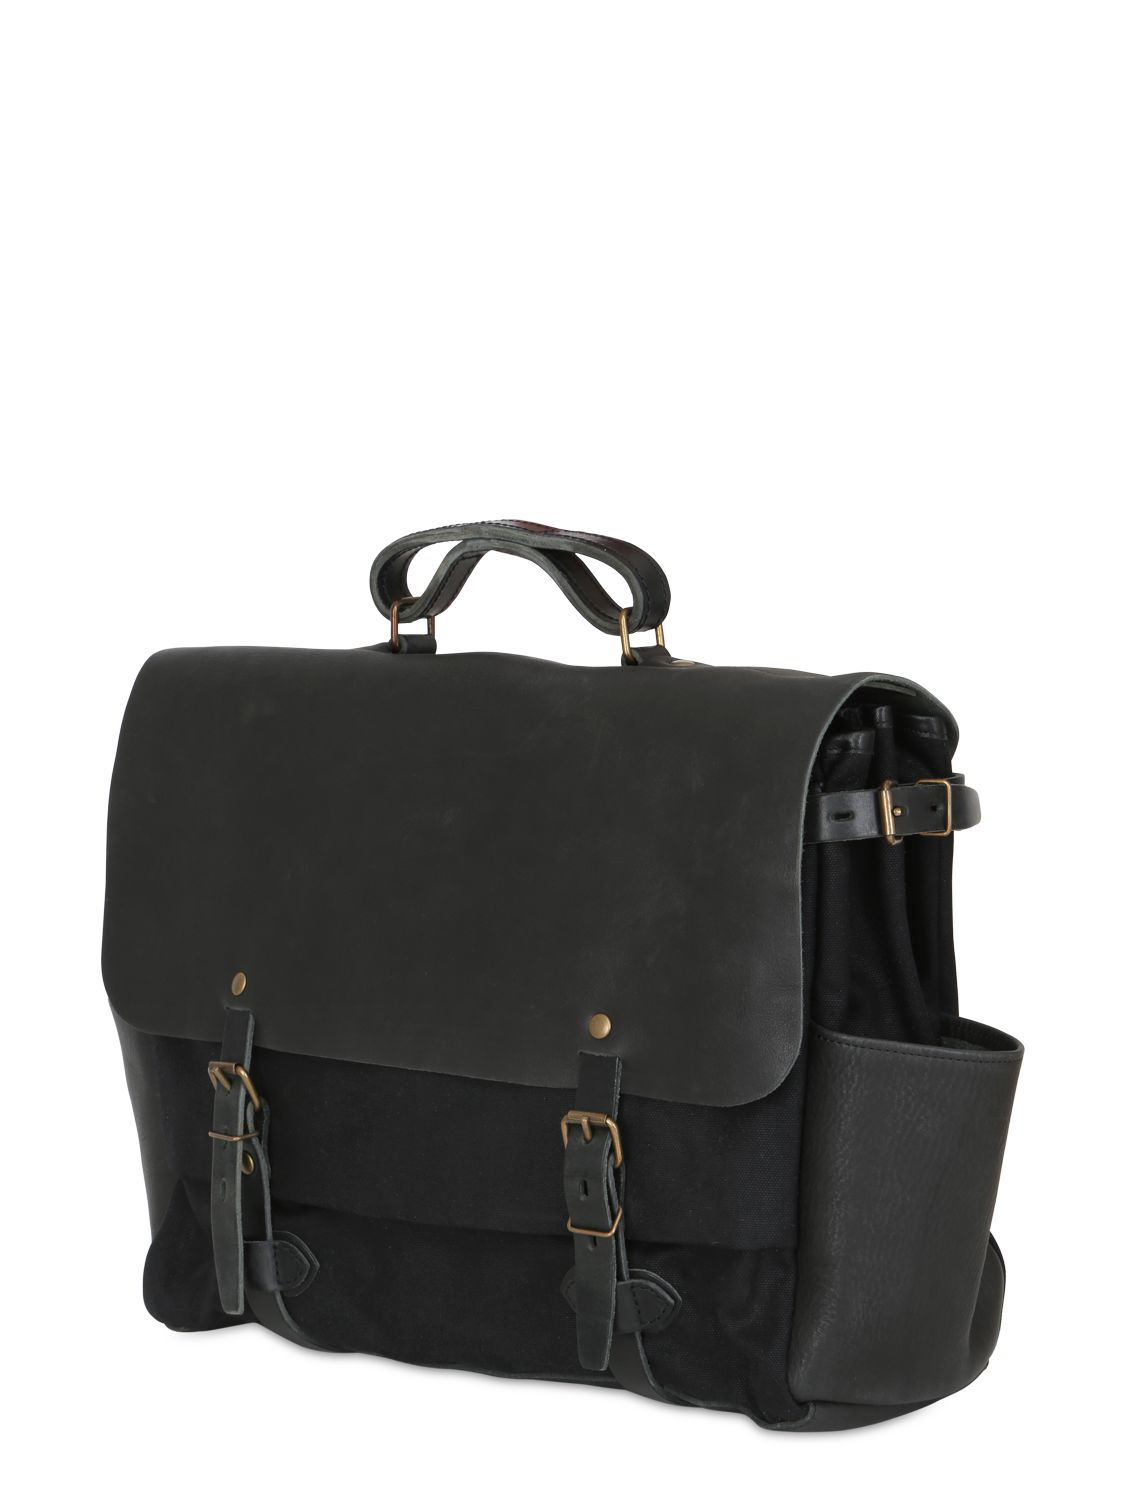 Lyst - Bleu De Chauffe Irving Handmade Leather Business Bag in Black for Men